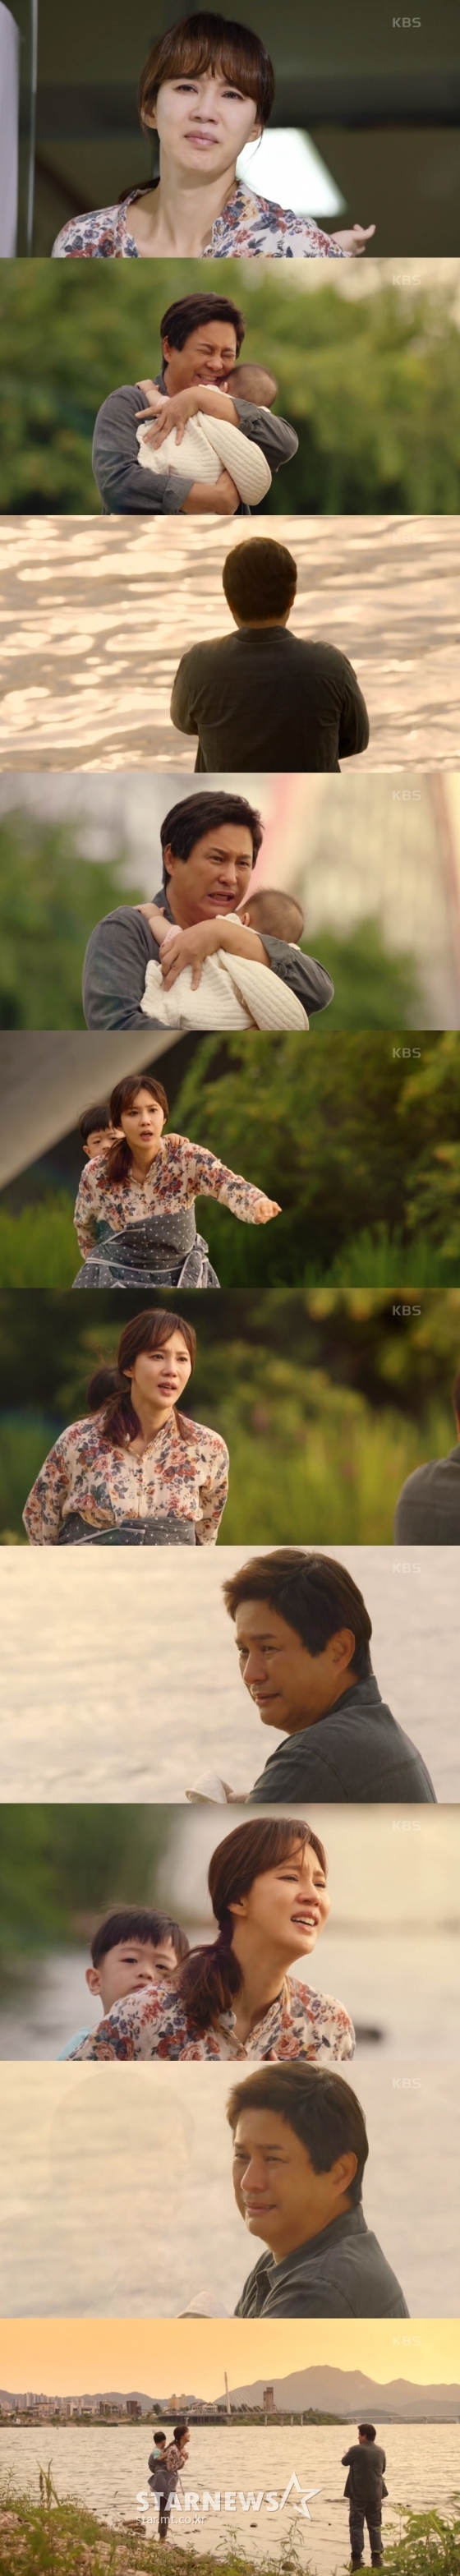 KBS 2TV '신사와 아가씨' 임영웅 OST '사랑은 늘 도망가' 삽입 장면